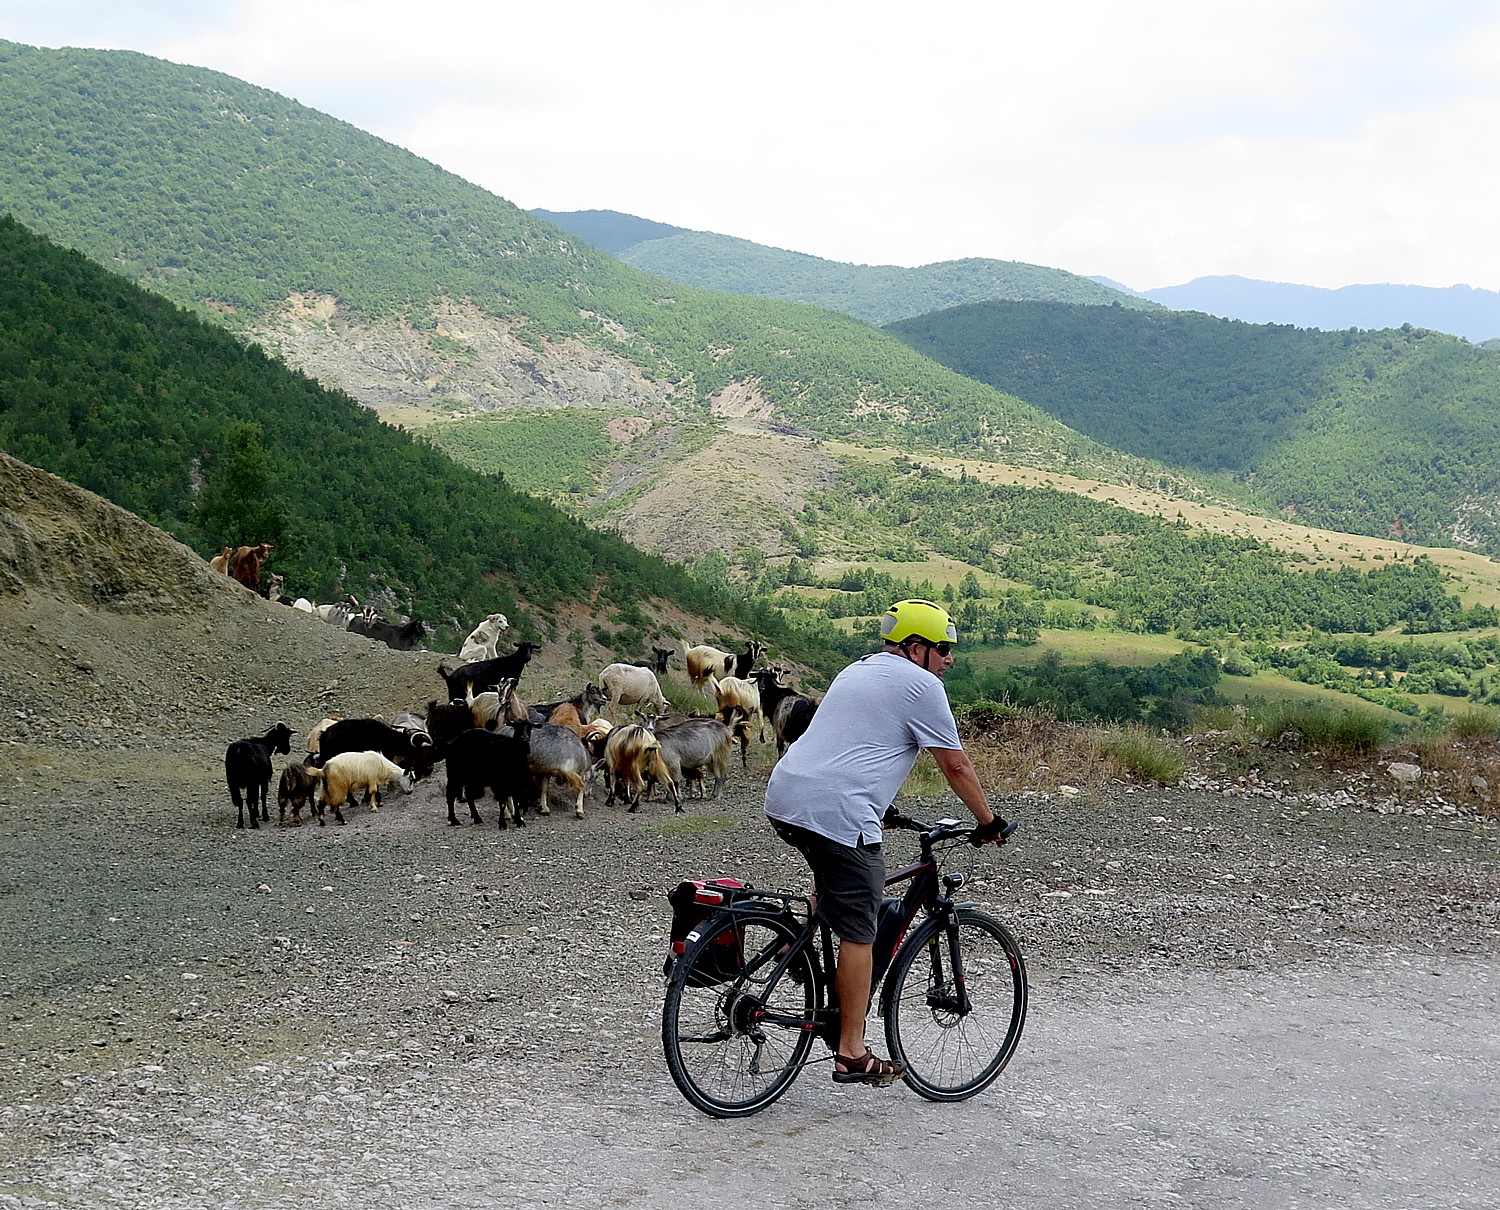 BikeTours.com President Jim Johnson biking in Albania on an e-bike. © 2016 Karen Rubin/goinplacesfarandnear.com